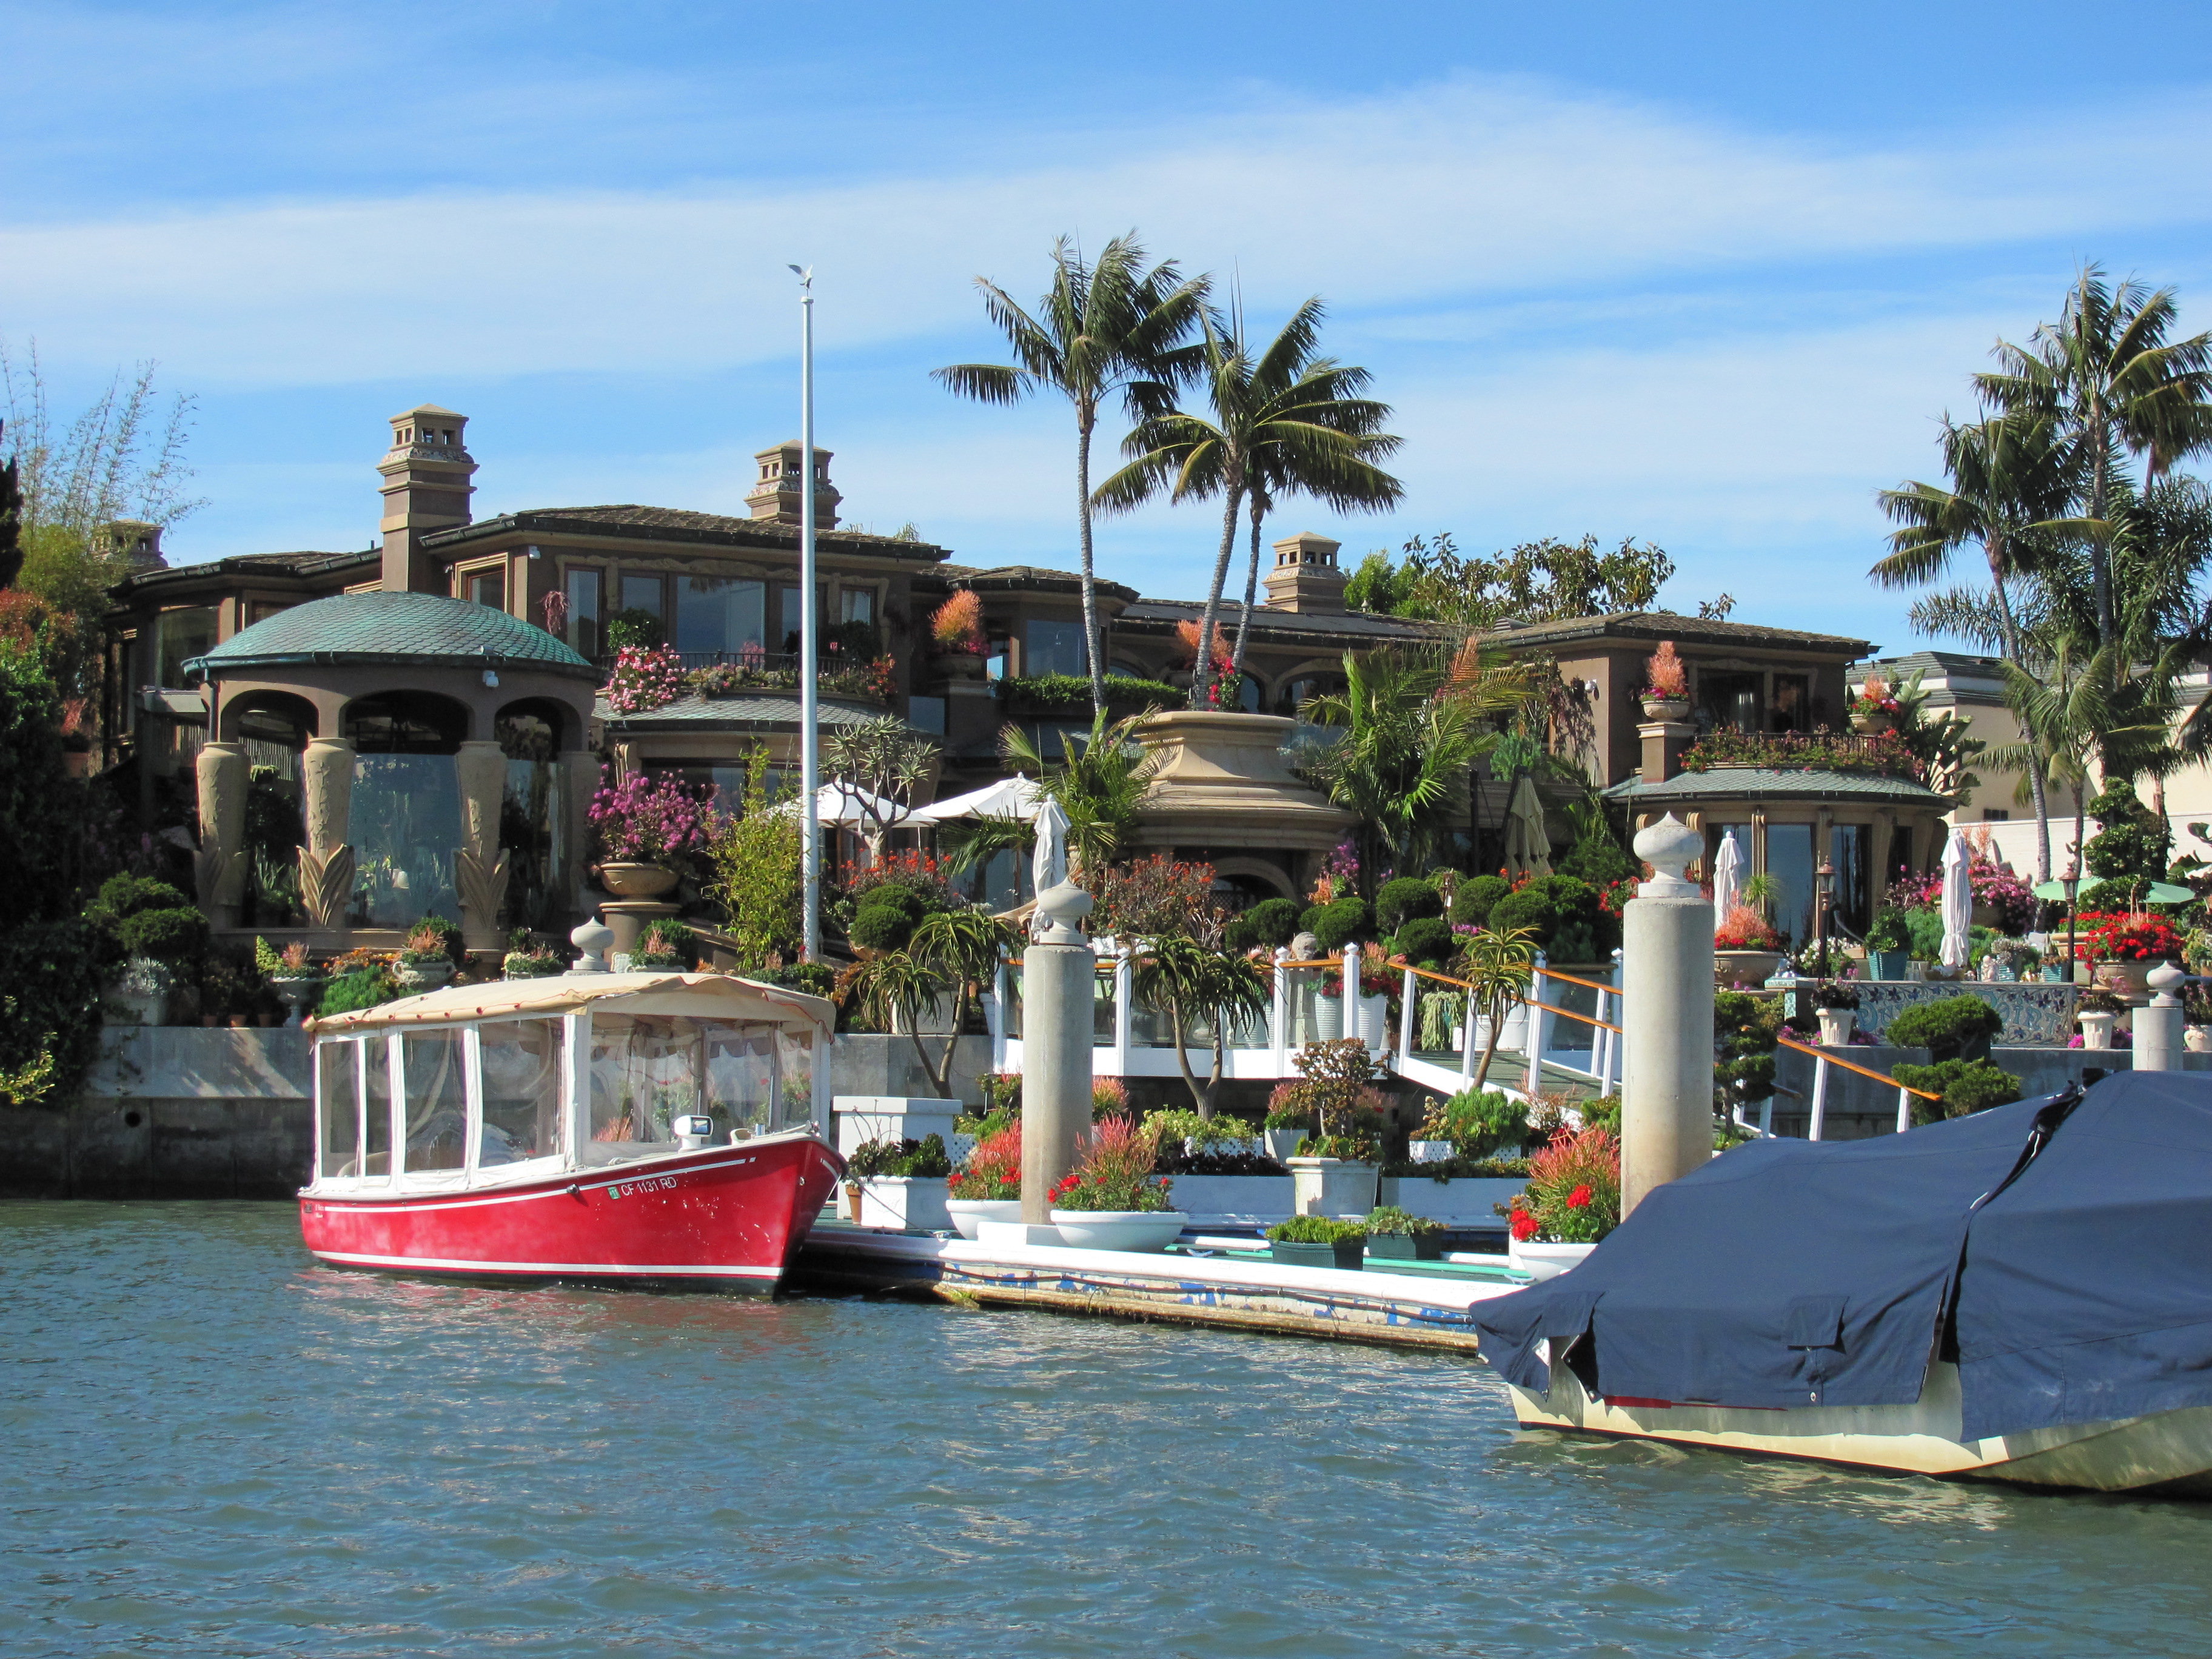 Duffy Boats, Sunken Keys and a Californian Family Vacation ...